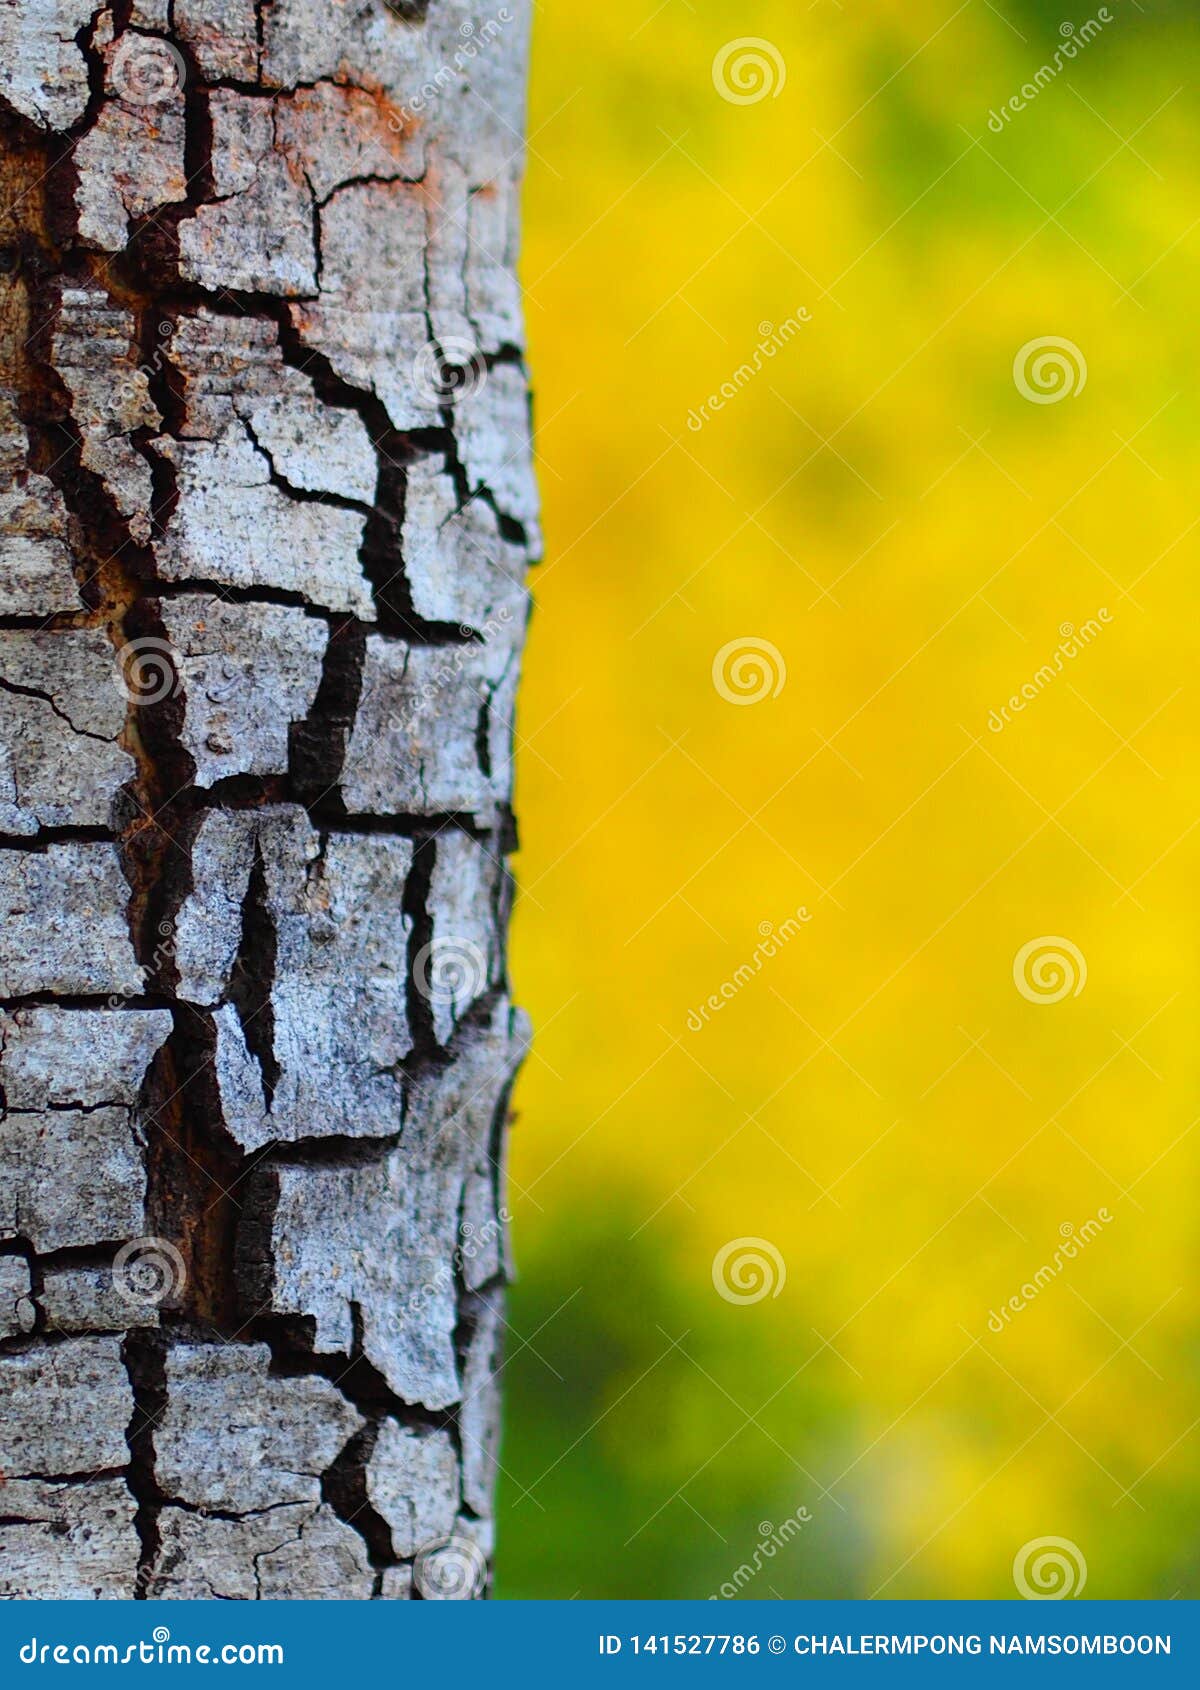 The Bark of the Tree on a Blurred Background,Cassia Fistula Flower Stock  Photo - Image of flower, fistula: 141527786